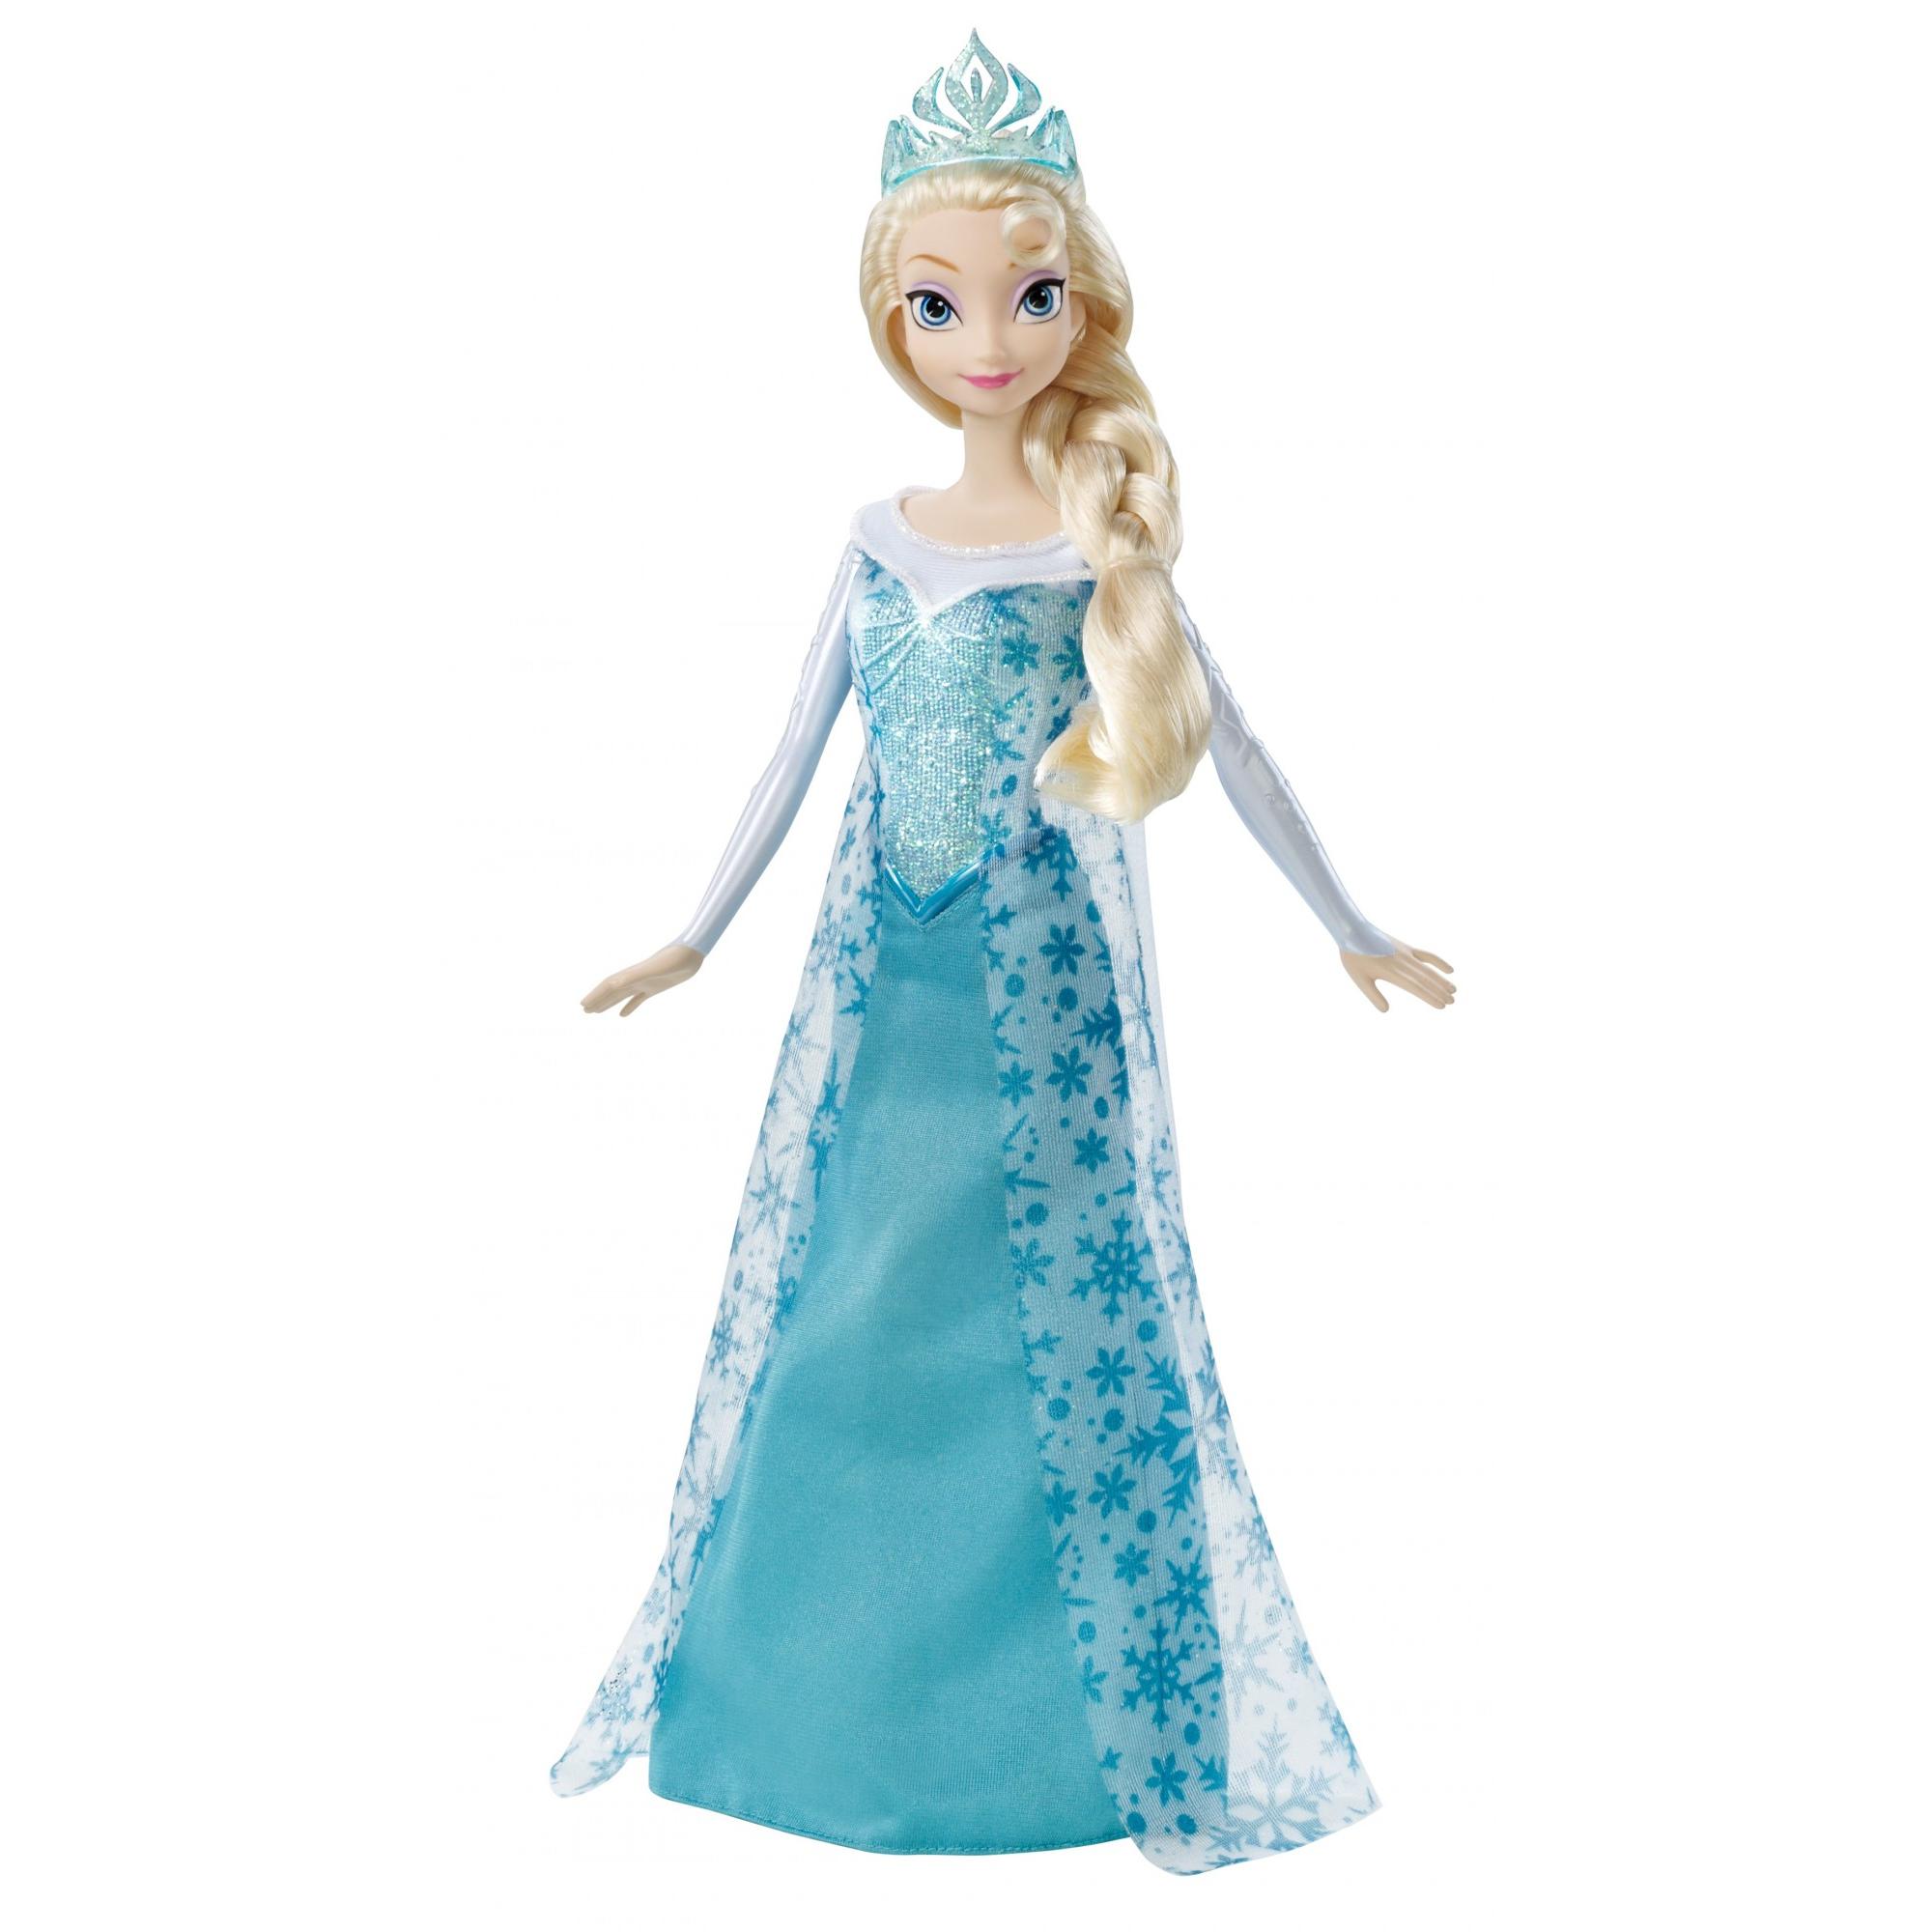 Disney Frozen Sparkle Elsa Doll - image 1 of 3